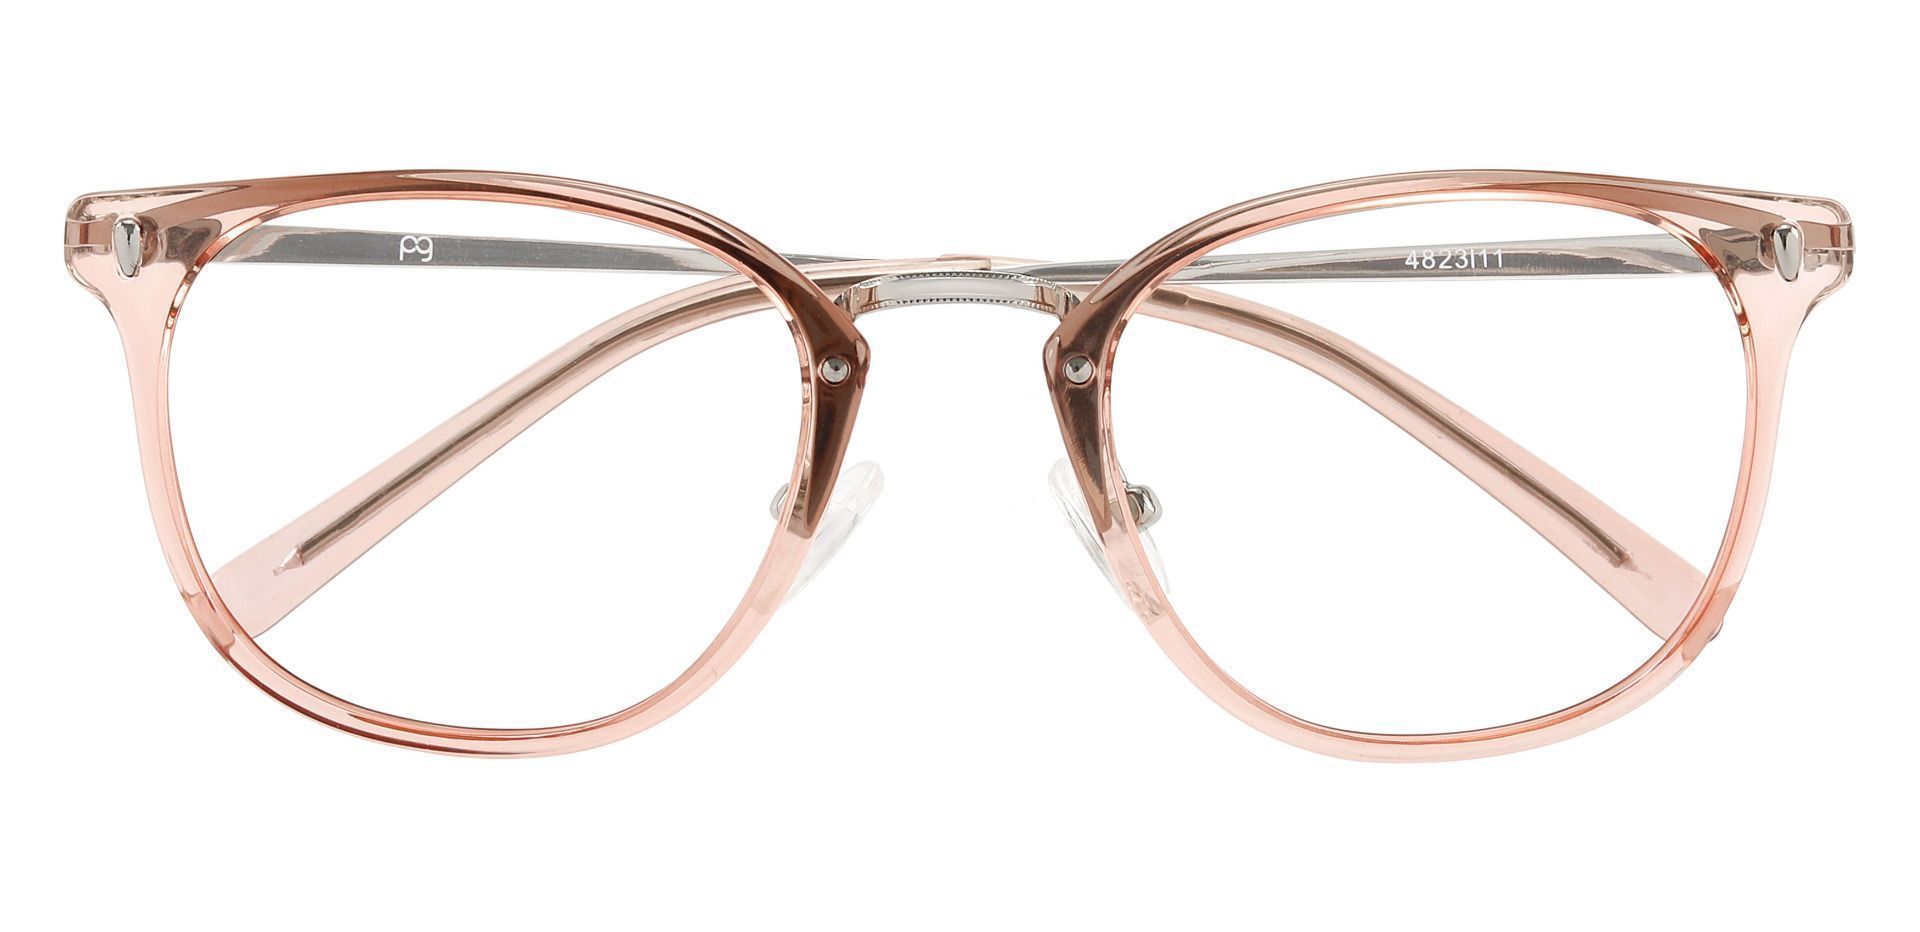 St. Clair Oval Prescription Glasses - Pink